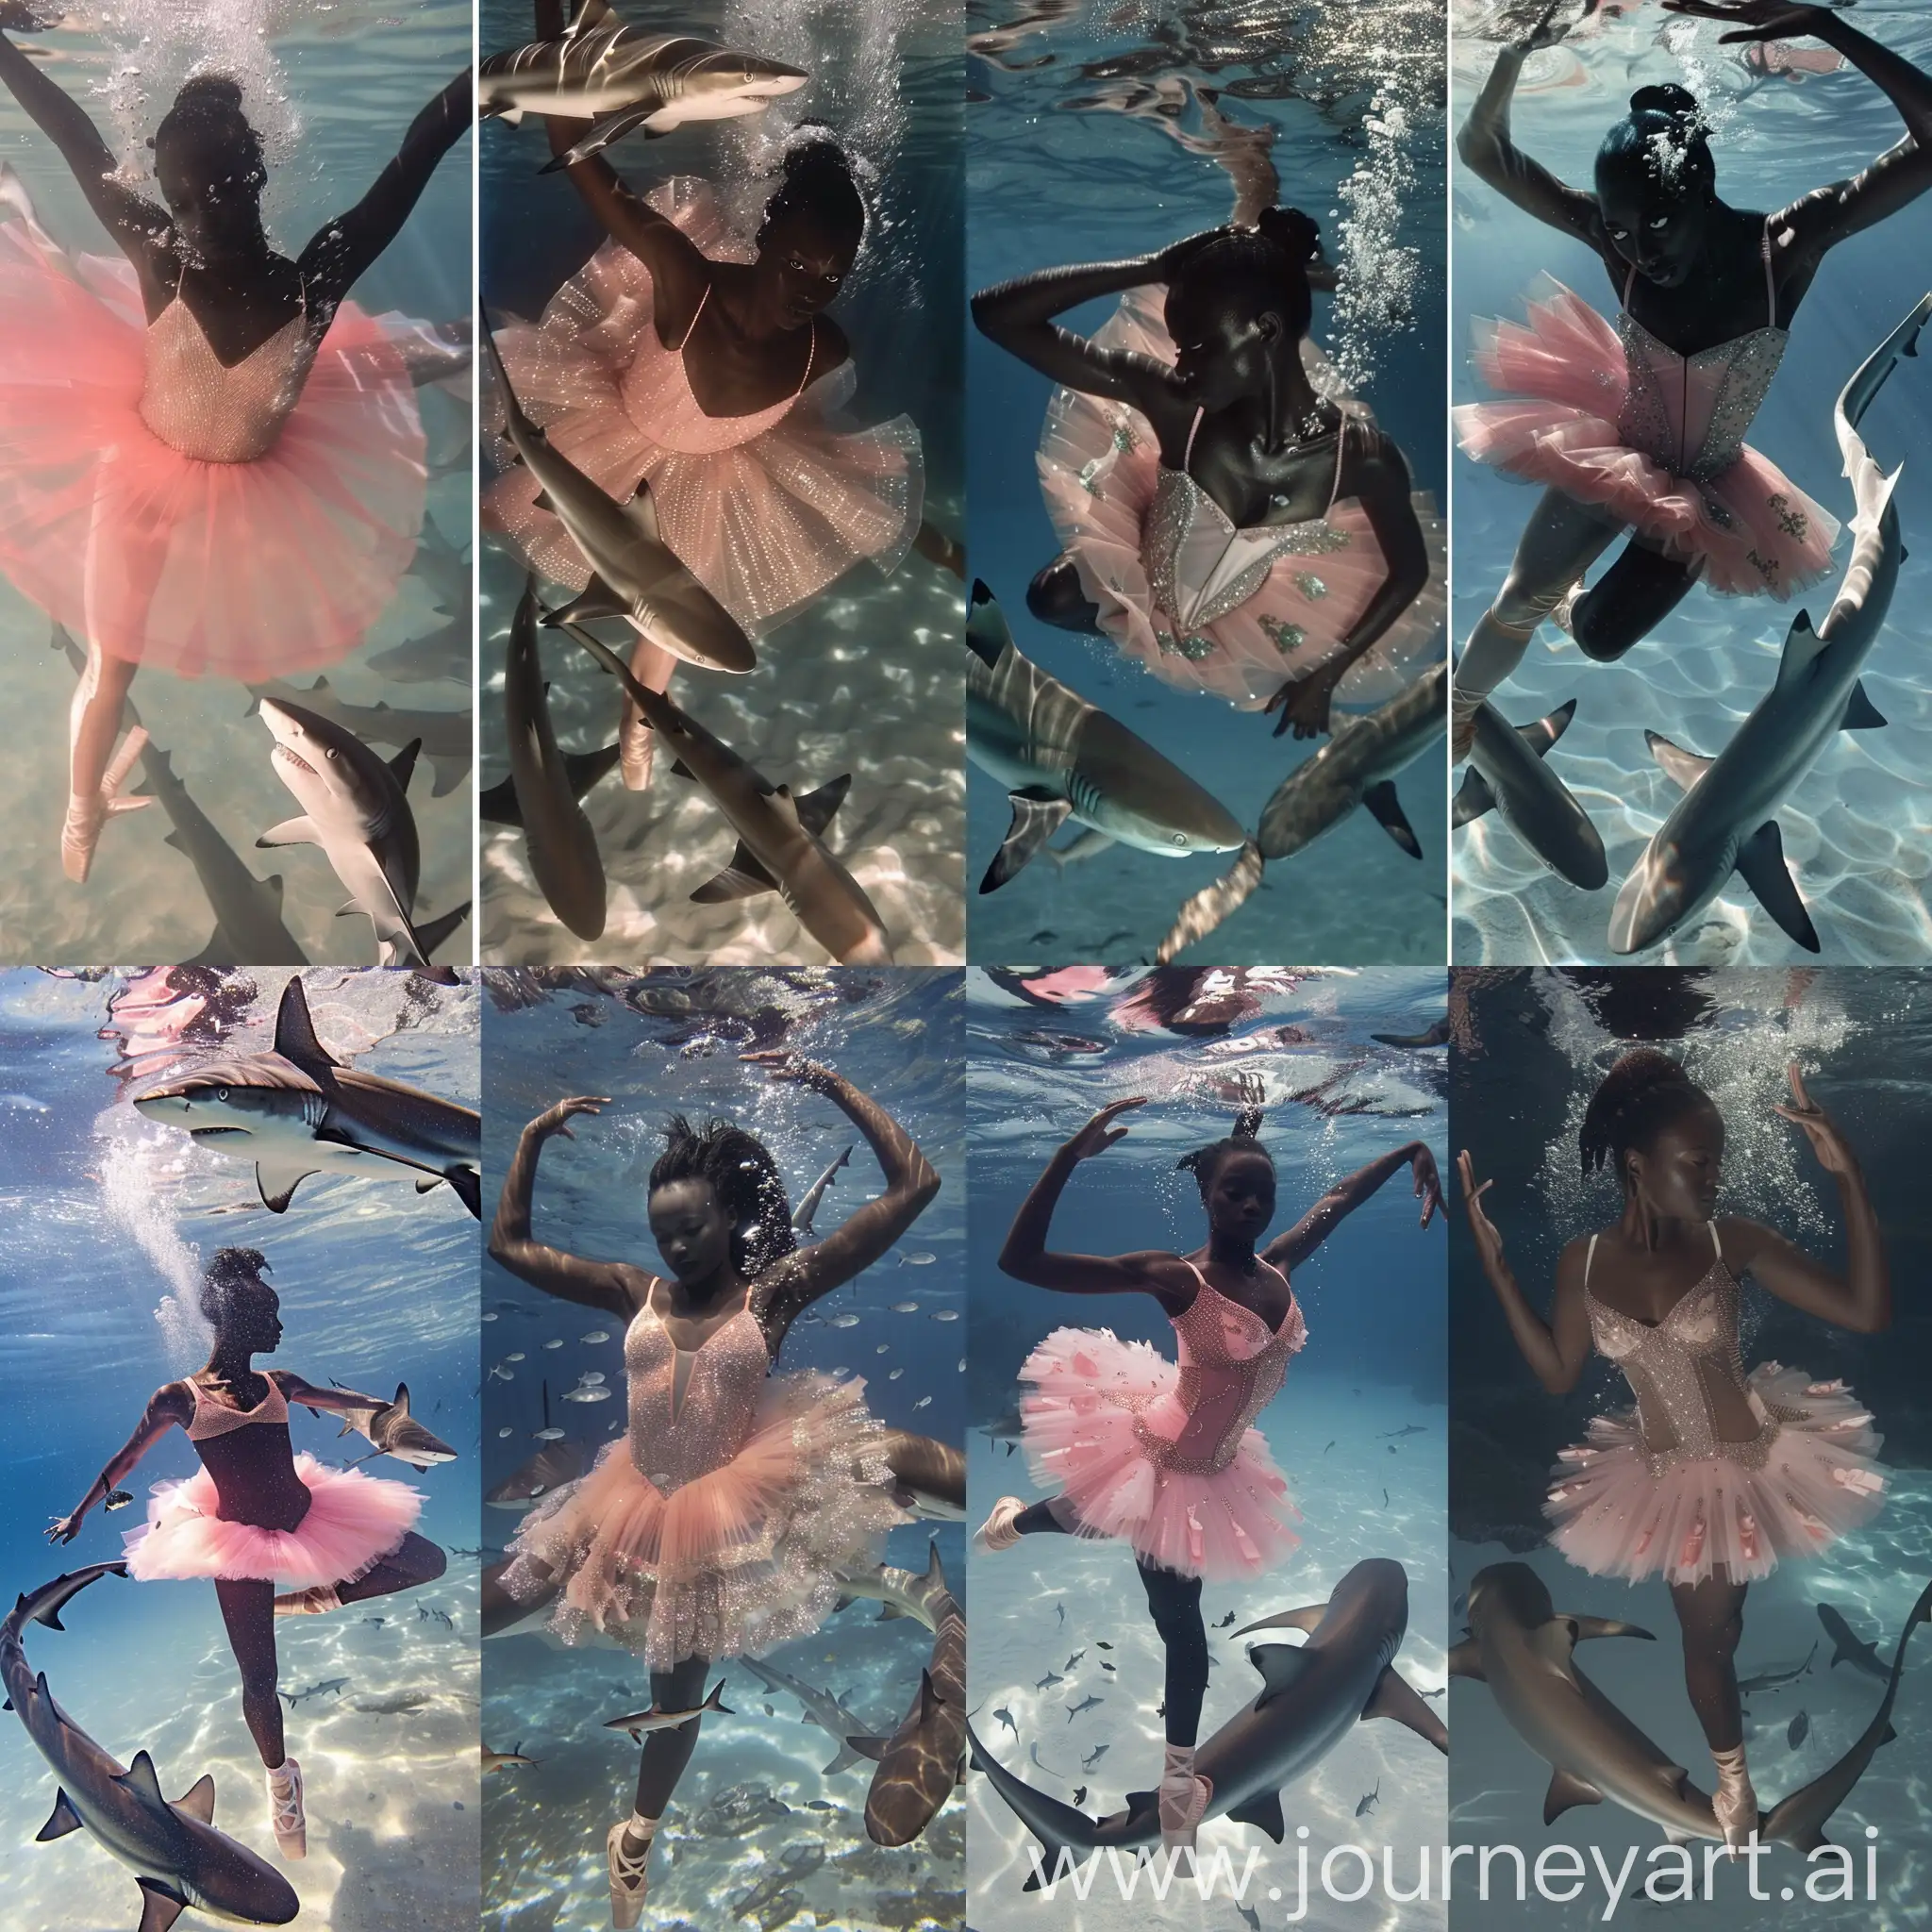 Black-Ballet-Dancer-Underwater-with-Sharks-Graceful-Performer-Amidst-Marine-Predators